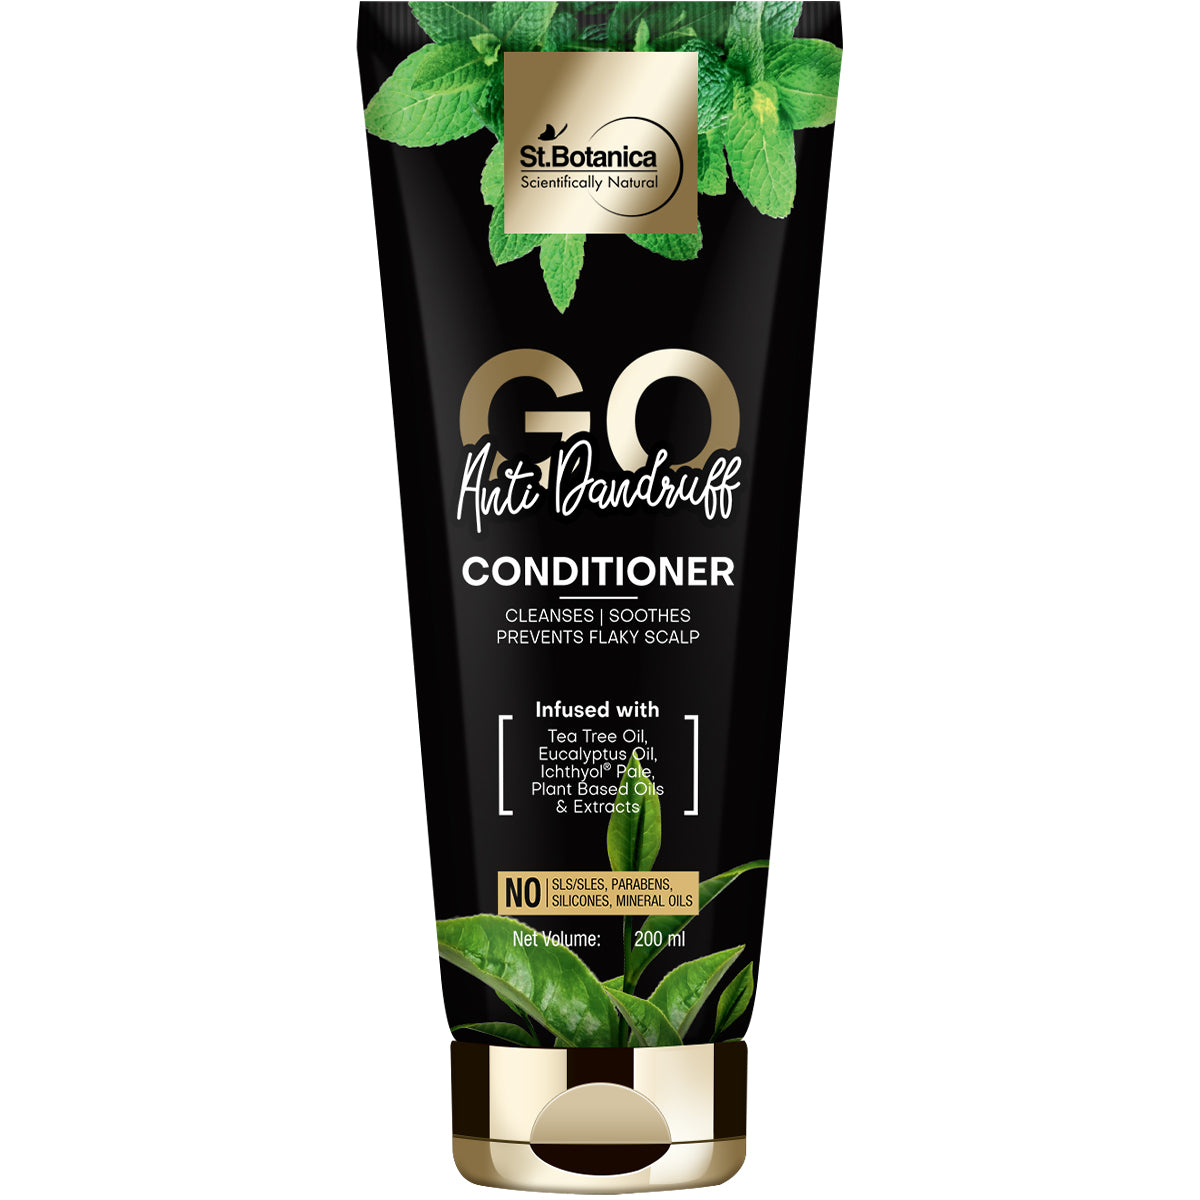 St.Botanica Go Anti Dandruff Shampoo + Conditioner, 200ml Each, No SLS/Sulphate, Paraben, Silicones, Colors